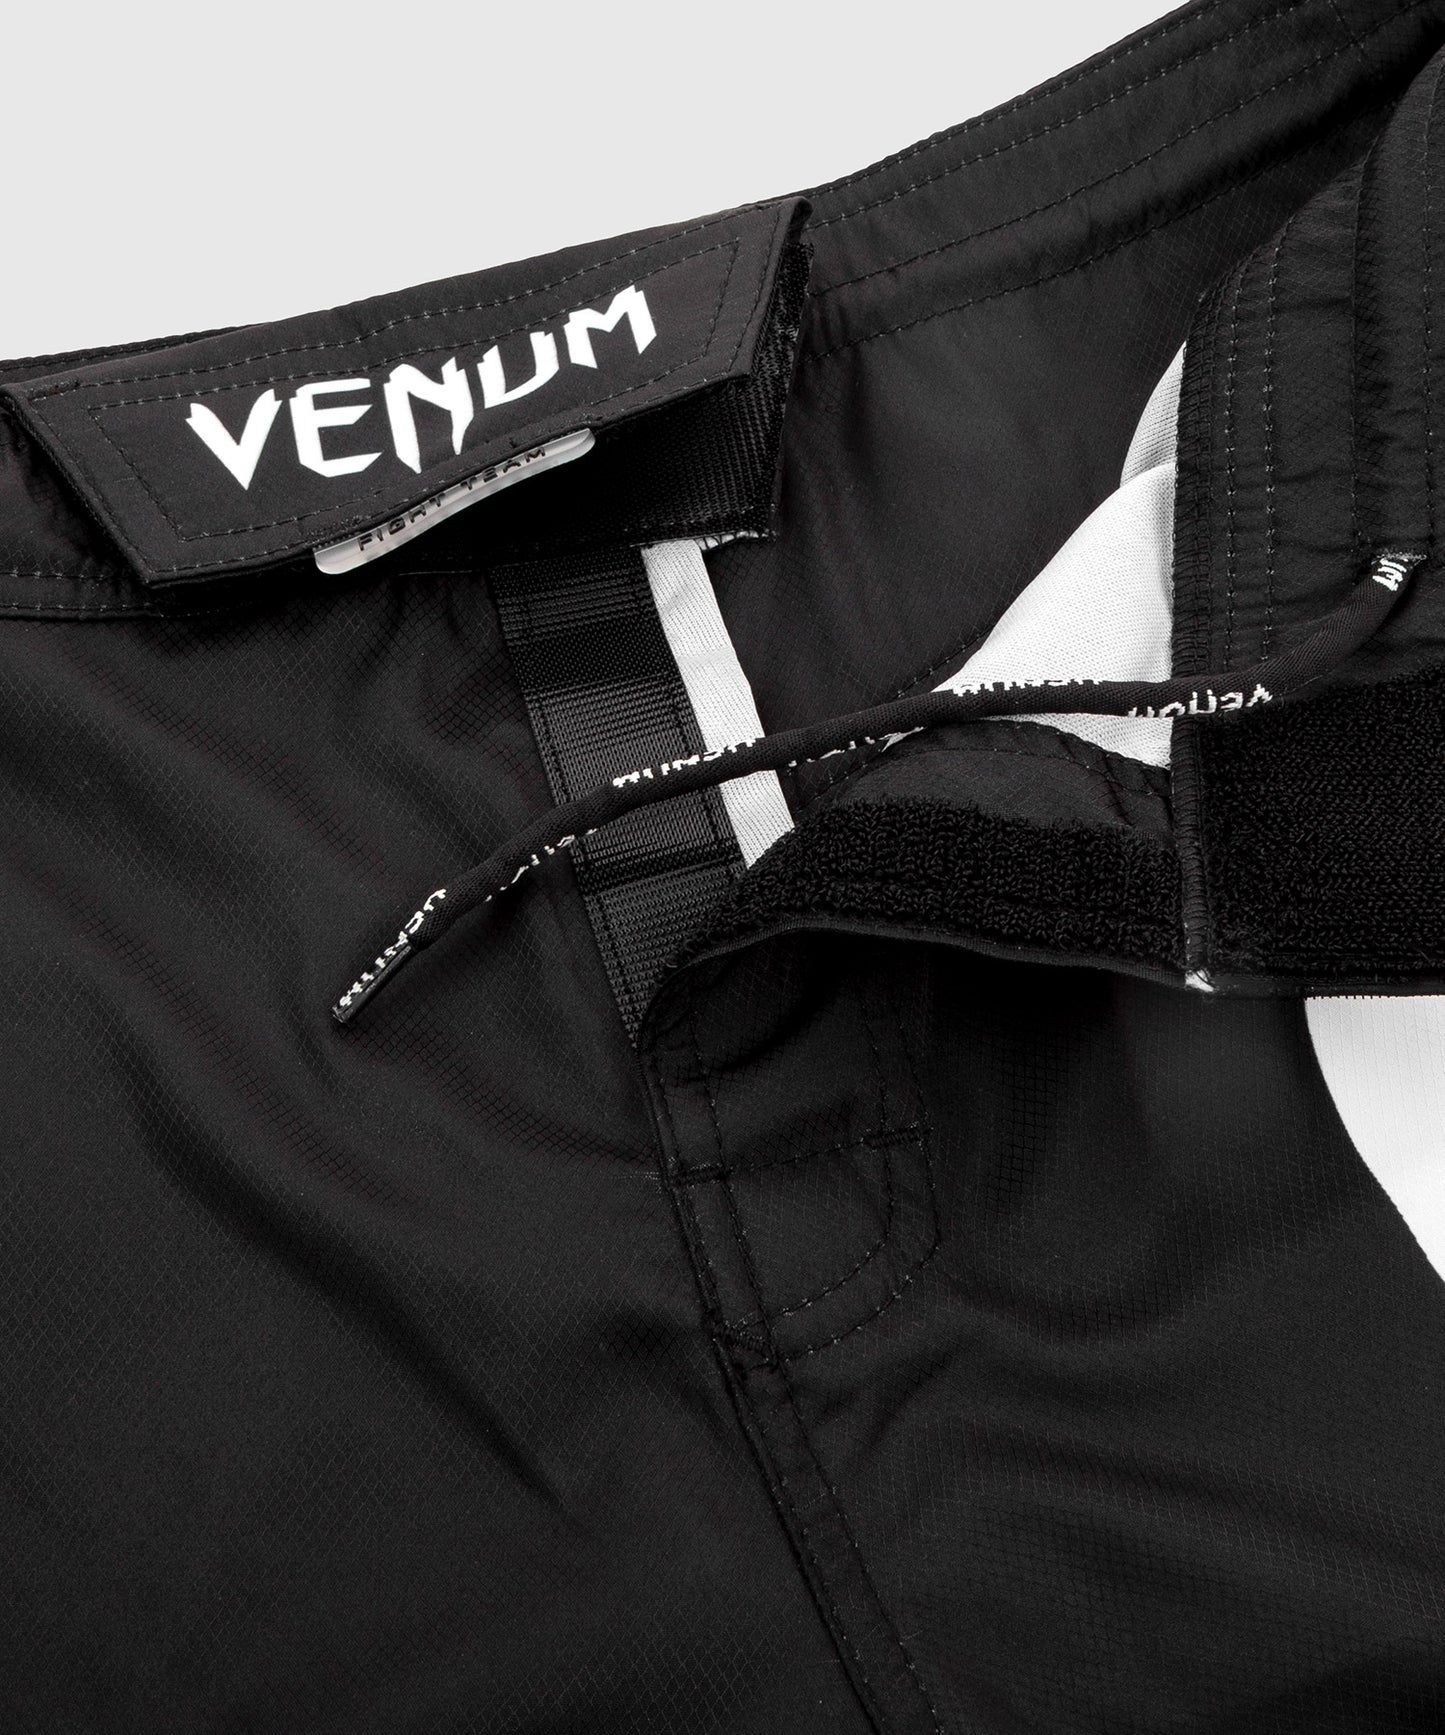 Pantalones cortos MMA Venum Light 3.0 - Negro/Blanco